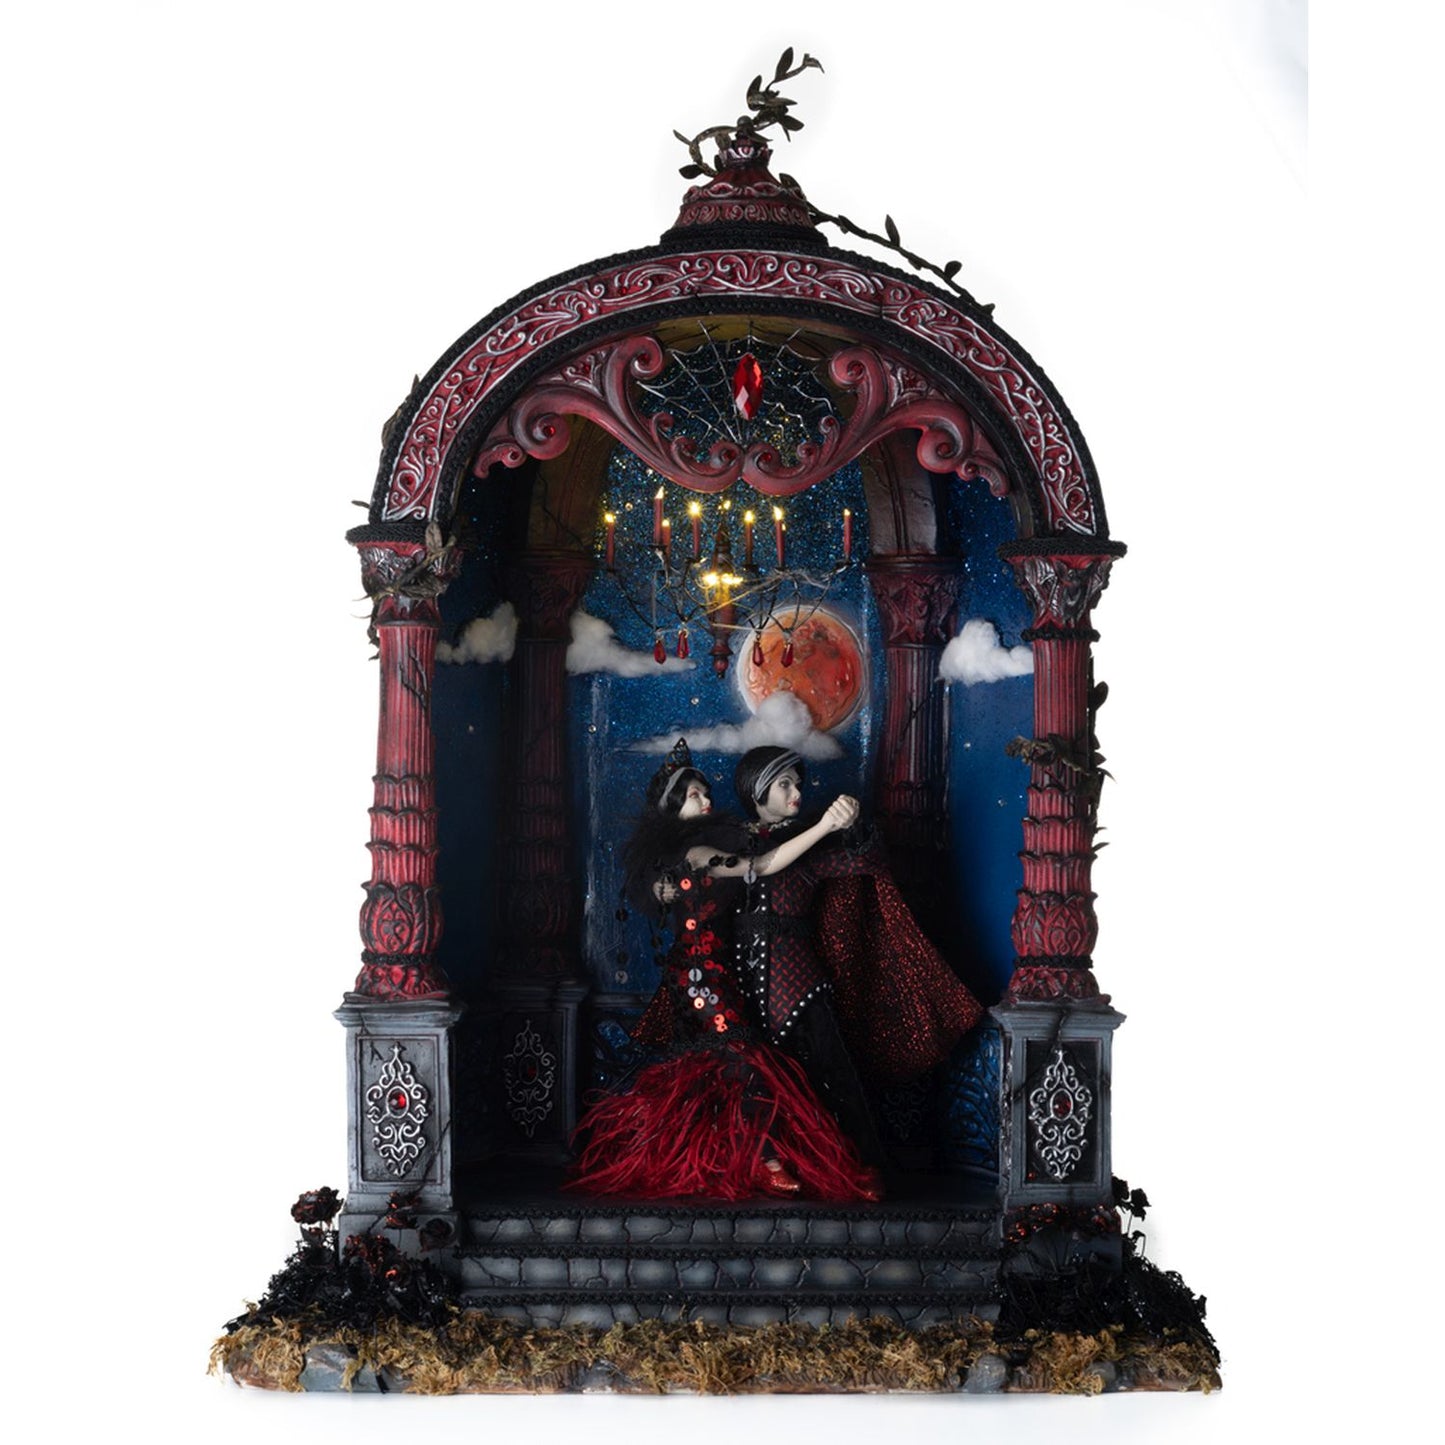 Katherine's Collection 24" Dance Till Dusk Tabletop Figurine, Red/Blue/Black Resin